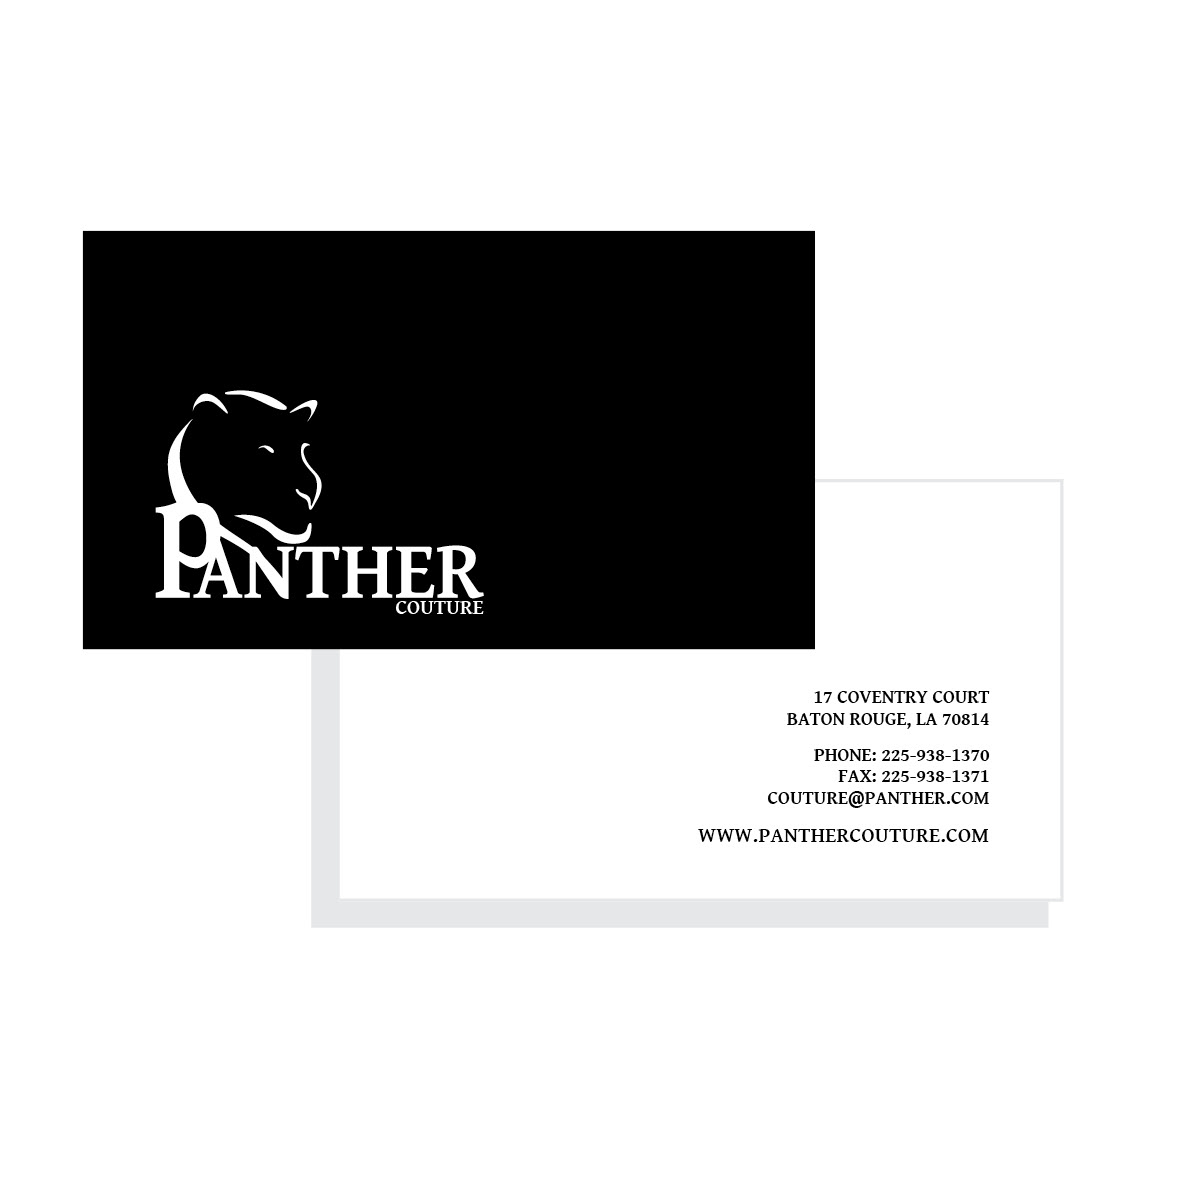 Corporate Identity Business Cards envelopes letterhead logos